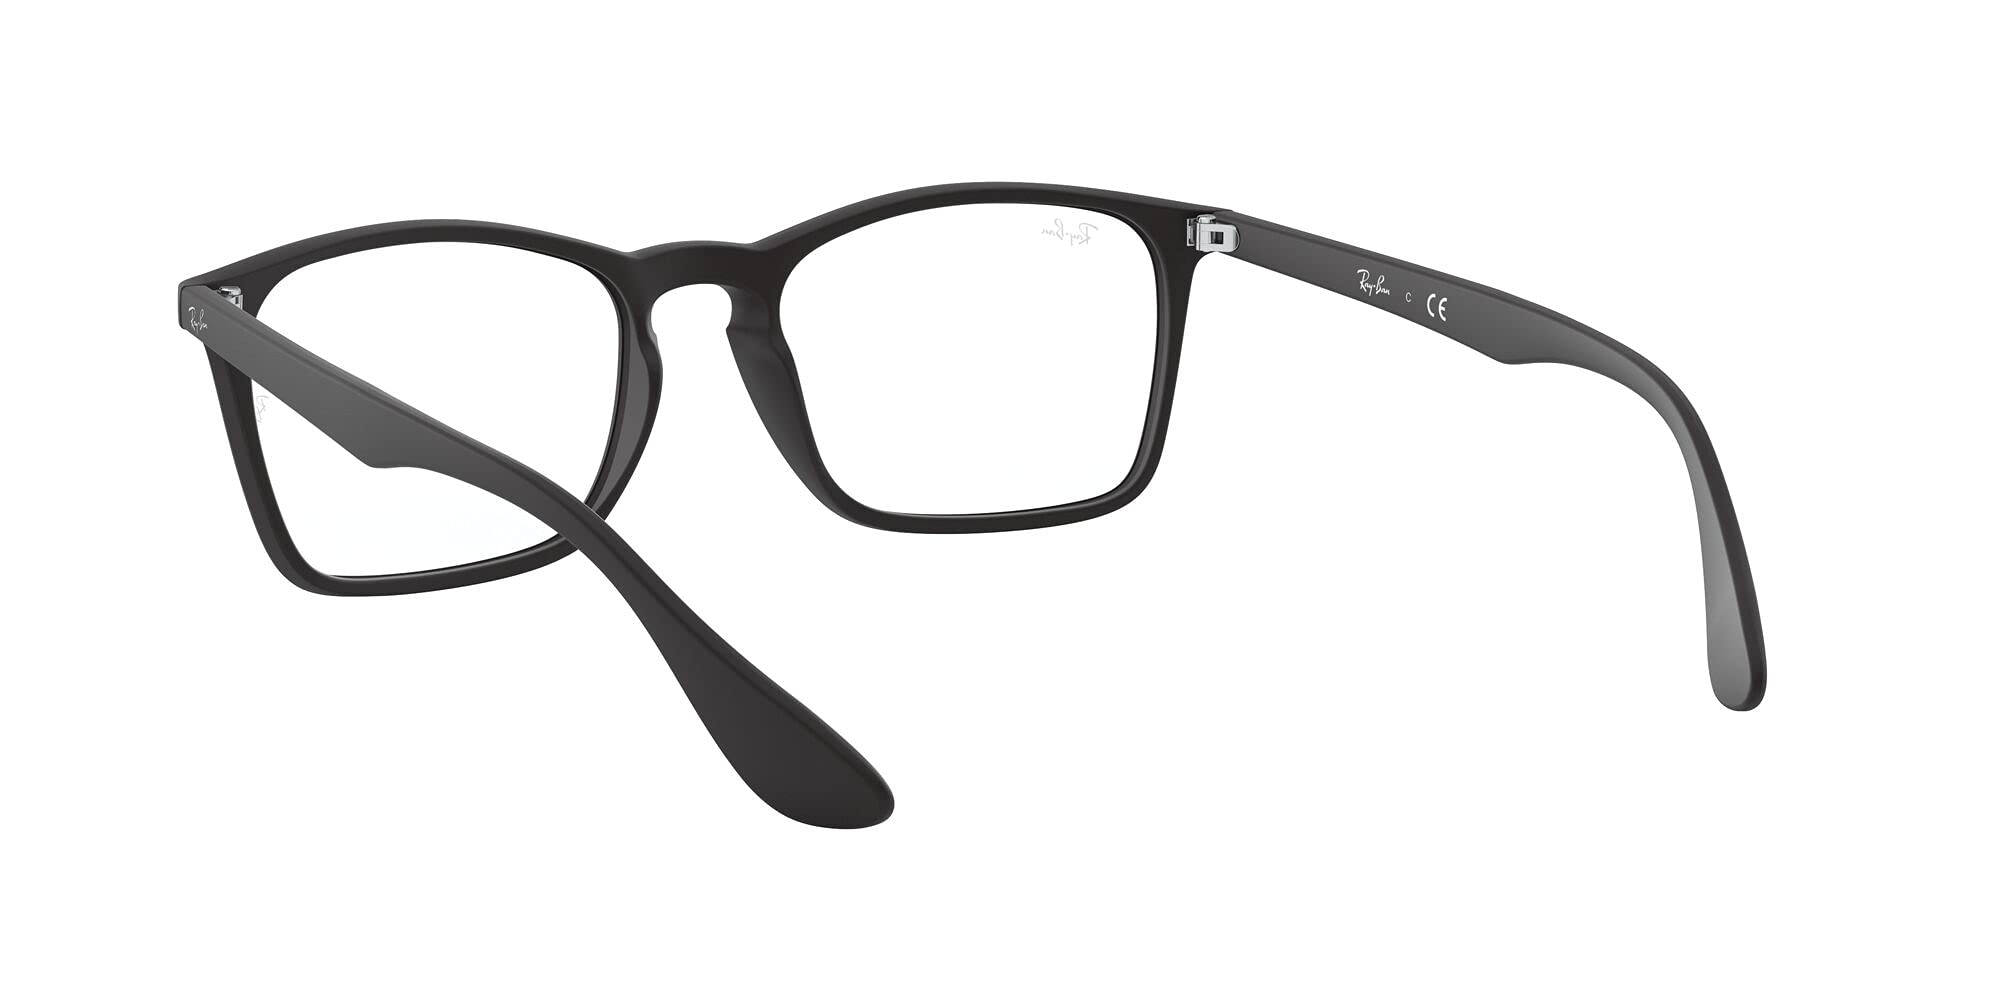 Ray-Ban Men's Rx7045 Square Prescription Eyeglass Frames, Rubber Black/Demo Lens, 55 mm